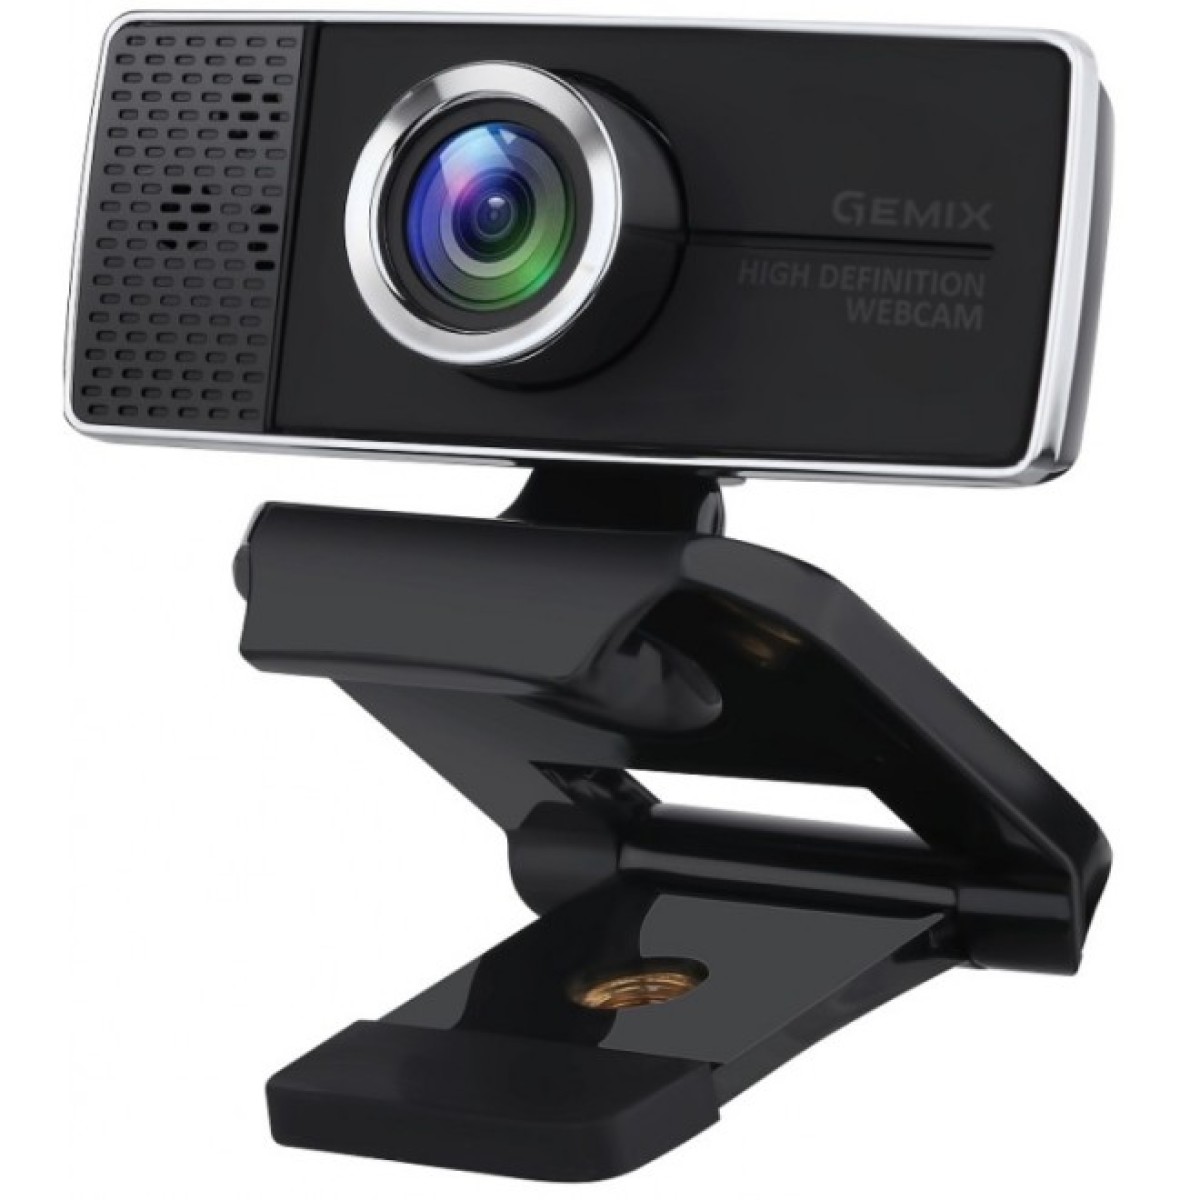 Веб-камера Gemix T20 Black 98_98.jpg - фото 2